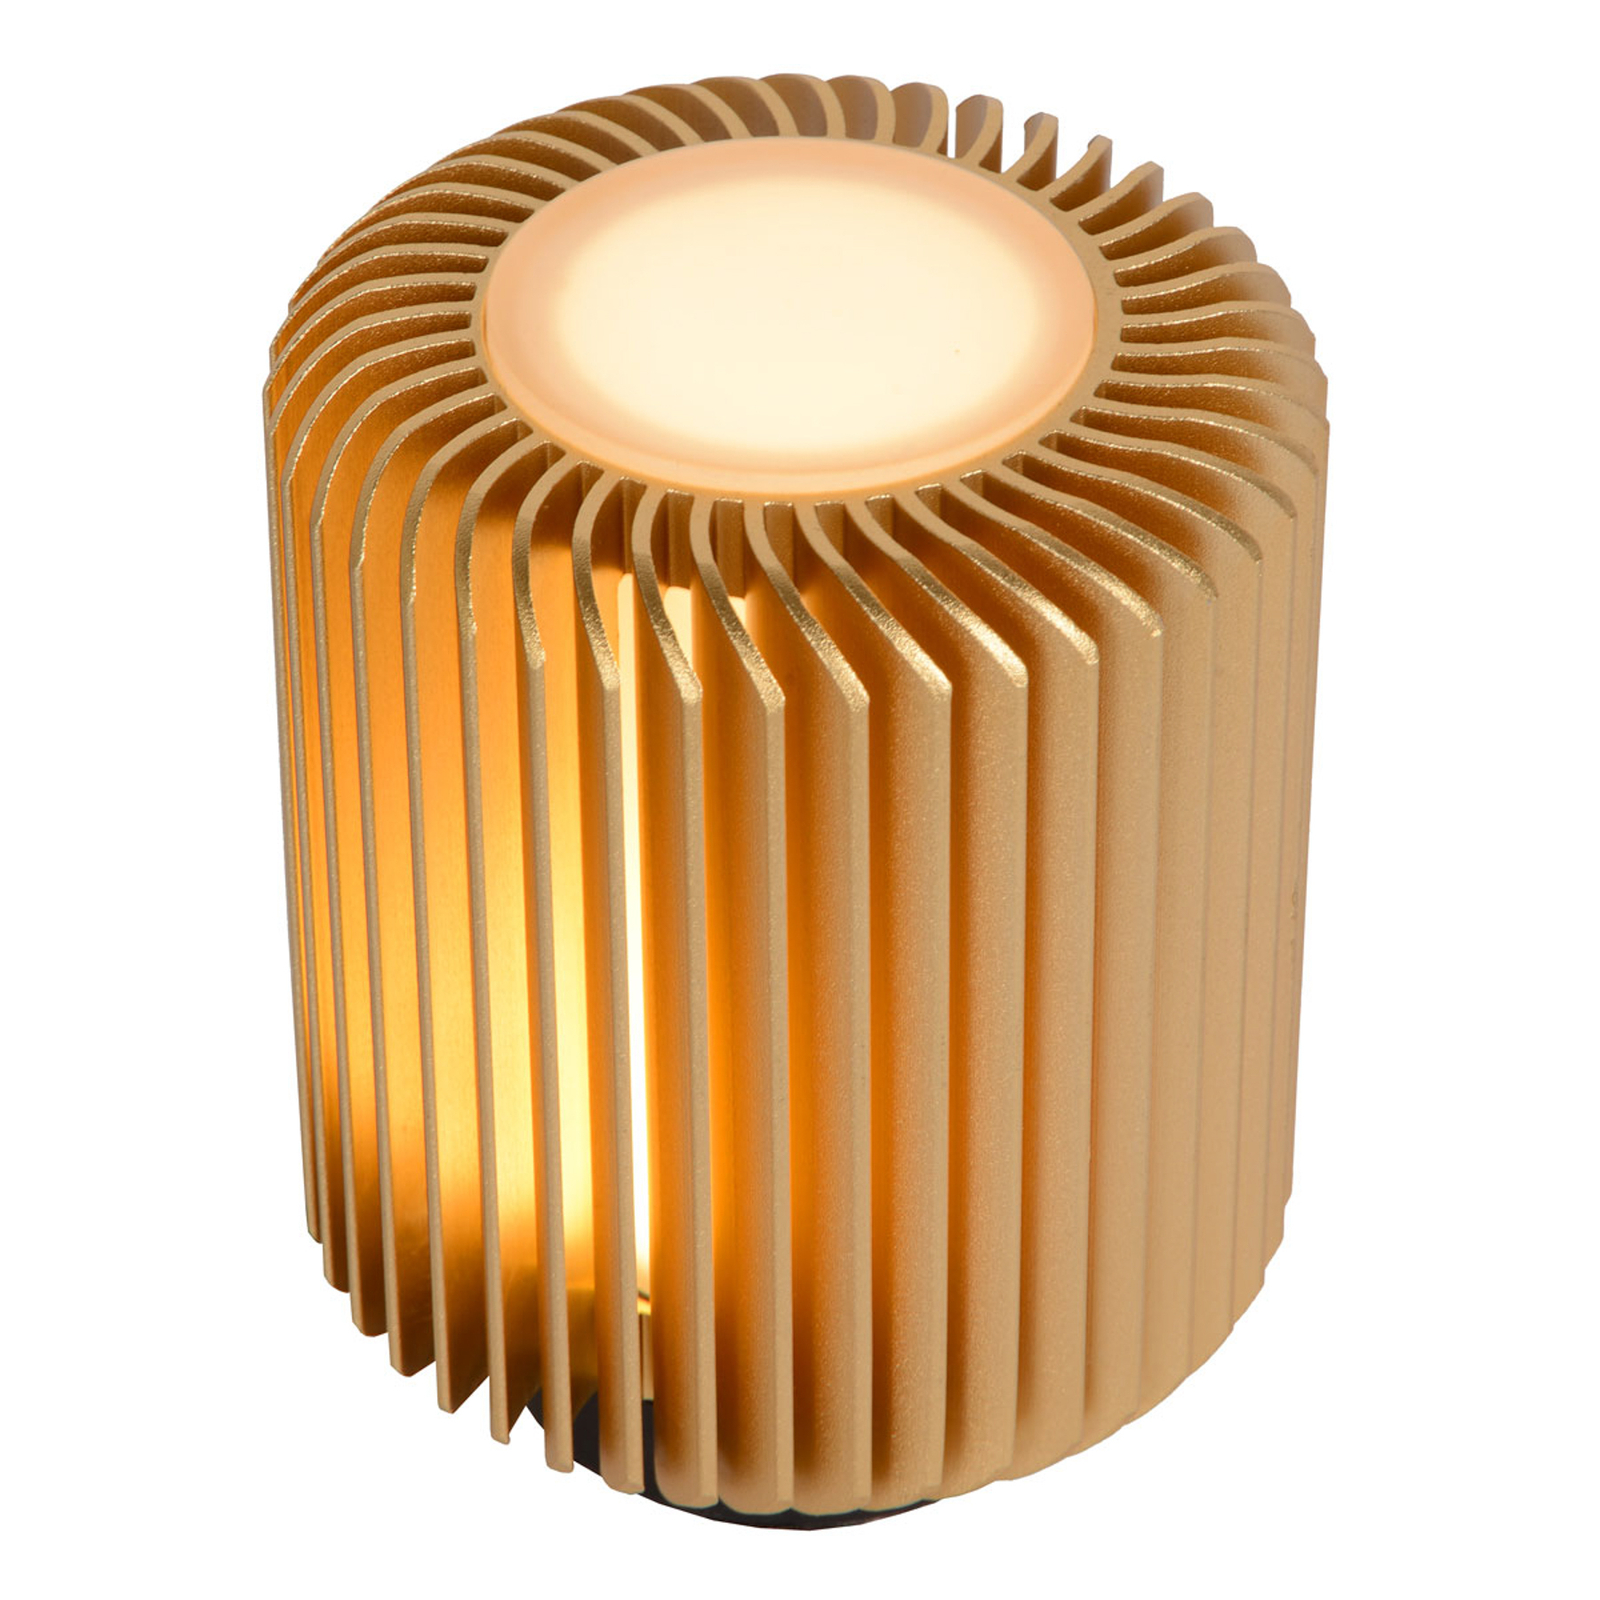 LED tafellamp Turbin, goud